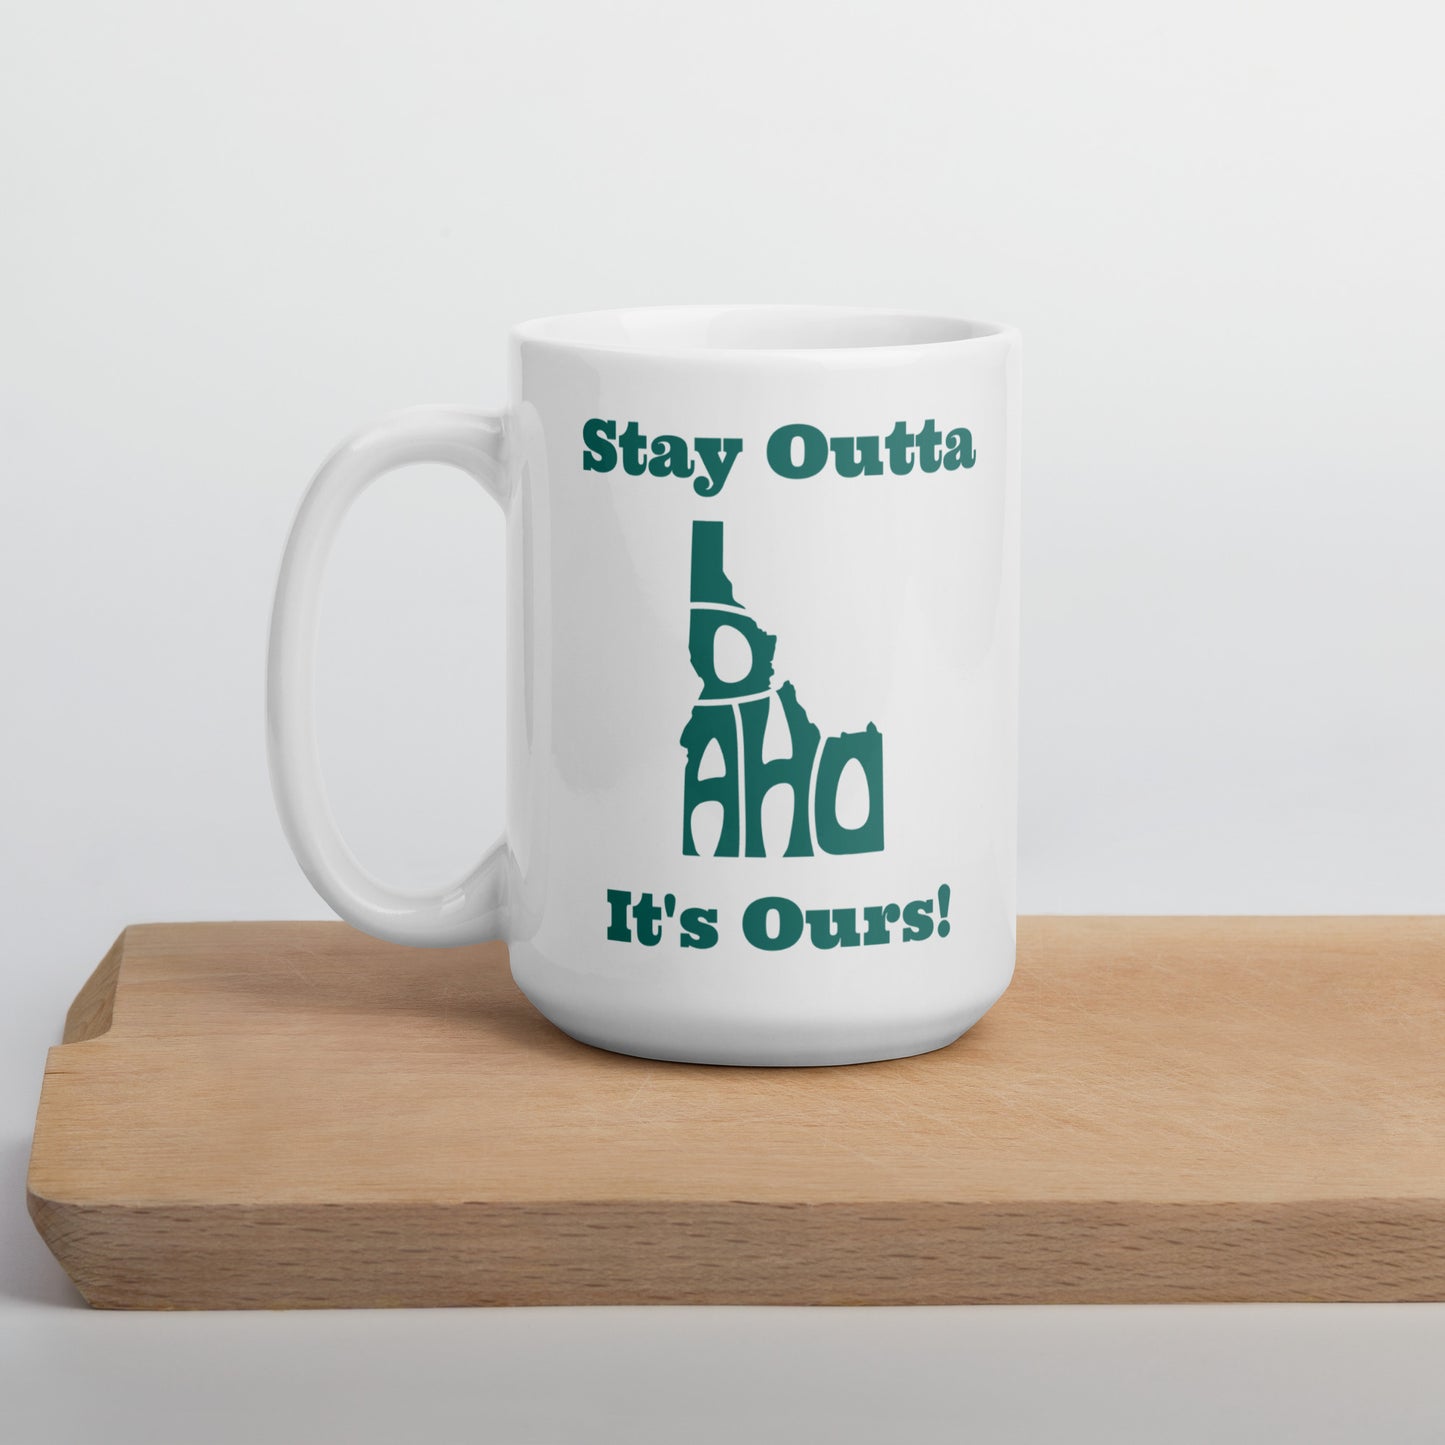 Stay Outta Idaho - Dark Green Font - White Glossy Mug